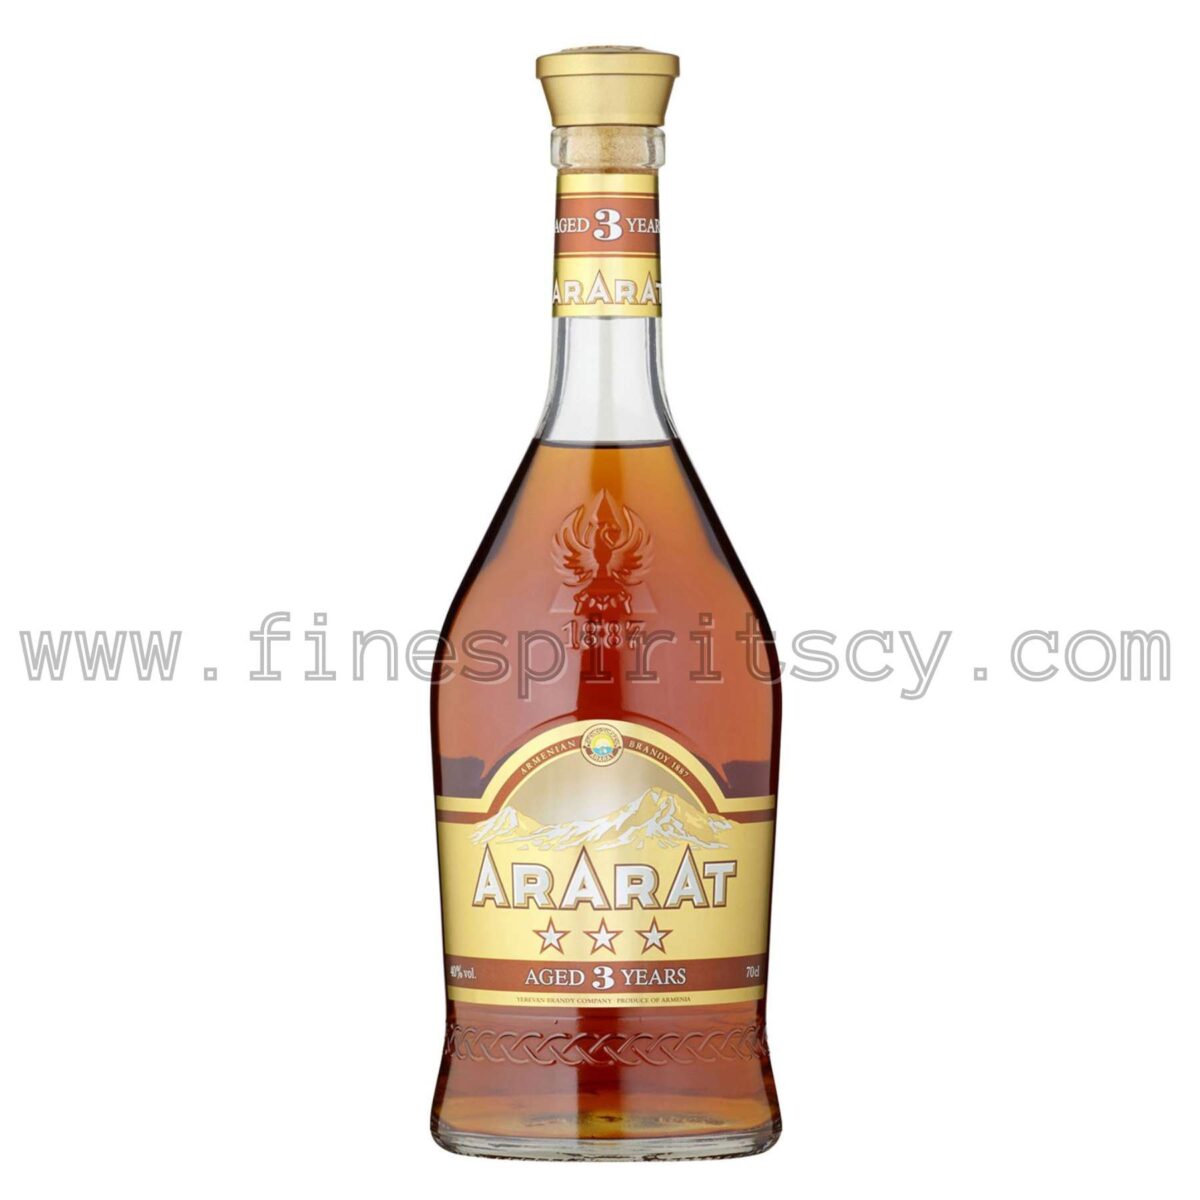 Ararat 3 Year Old 3 Star Brandy Cyprus Price Fine Spirits FSCY Price Online Order